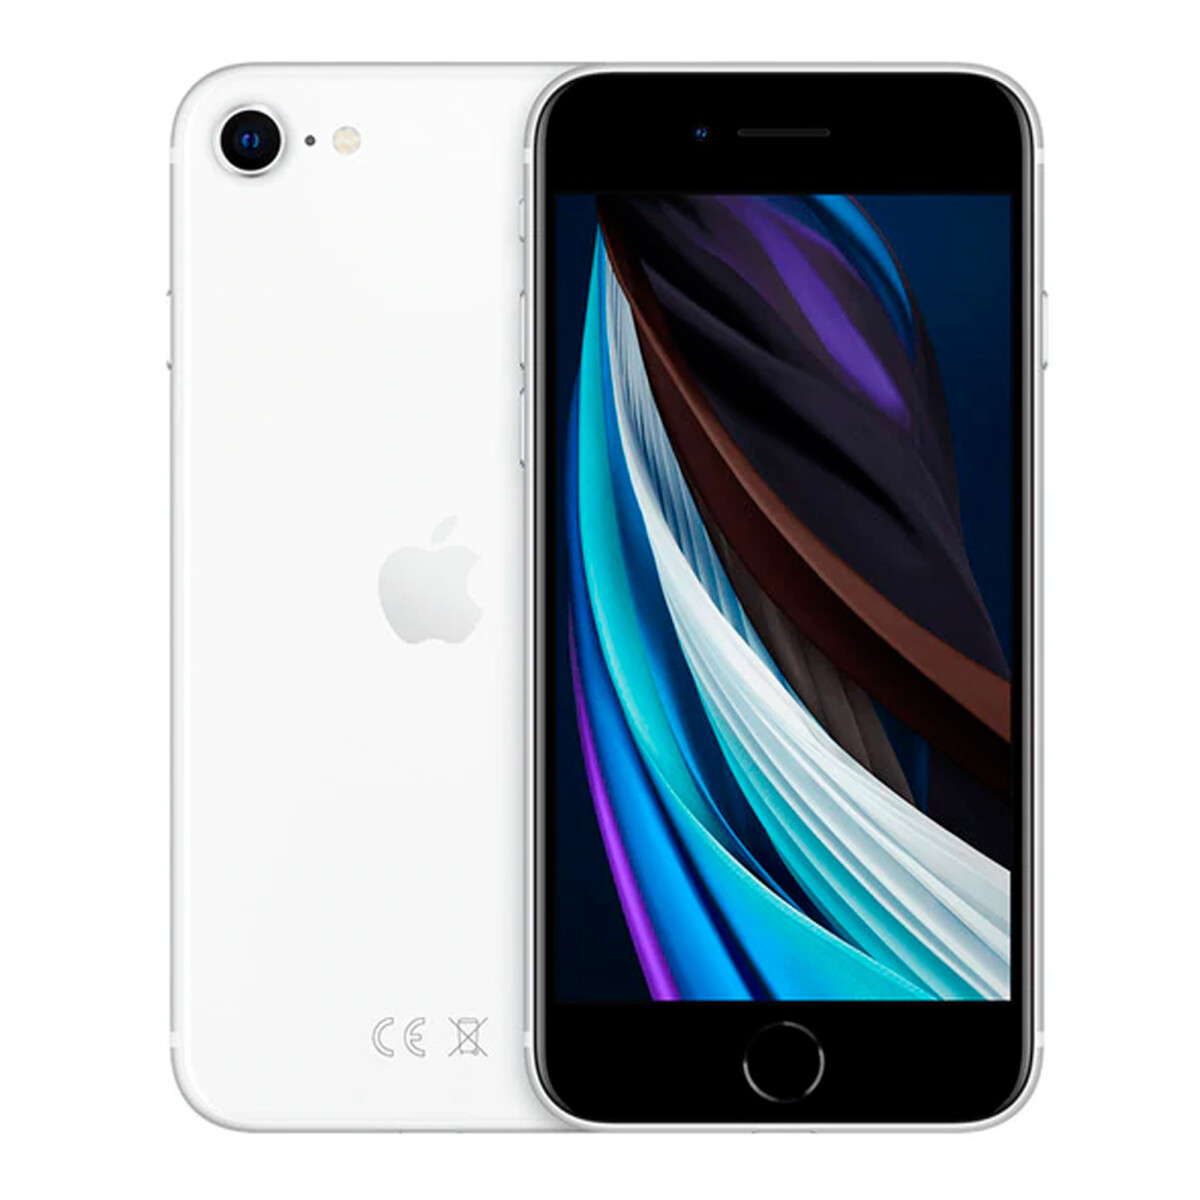 Apple - Celular Smartphone Iphone se 2 - IP67. 4,7" Multitáctil Retina Ips Lcd Capacitiva. 4G. 6 Cor - 001 